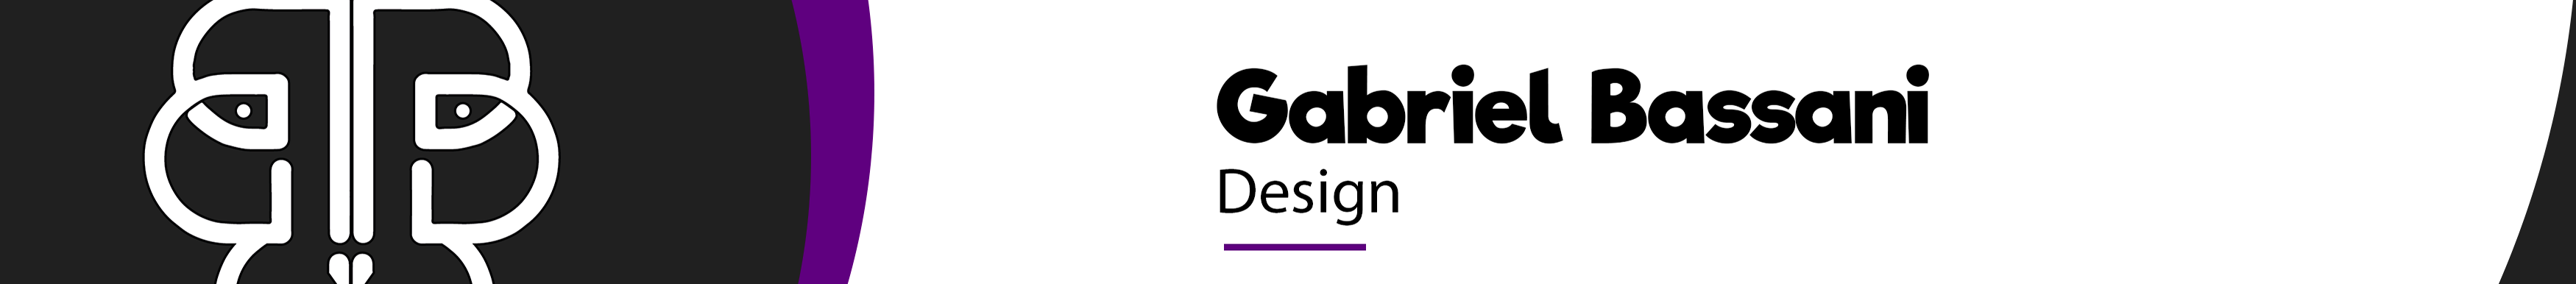 Gabriel Bassani's profile banner